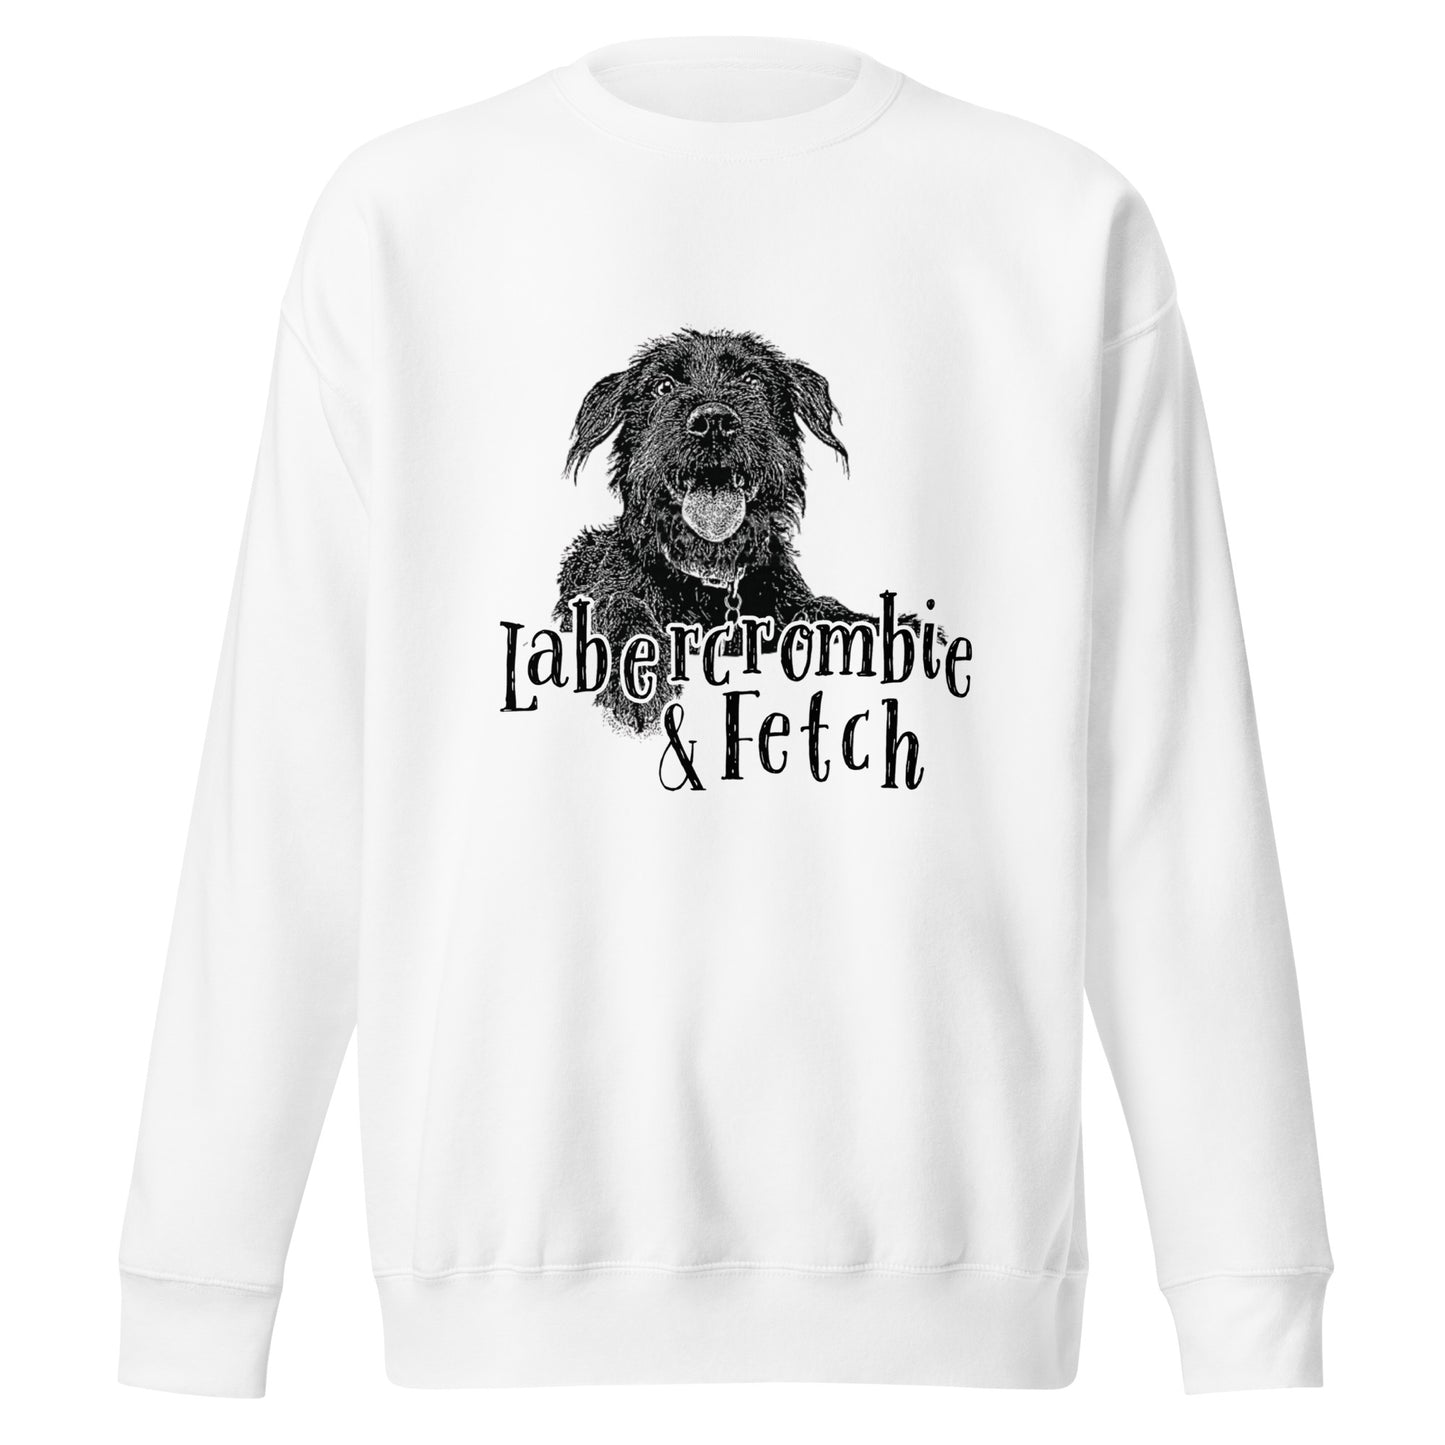 Labercrombie Shaggy Dog Unisex Premium Sweatshirt